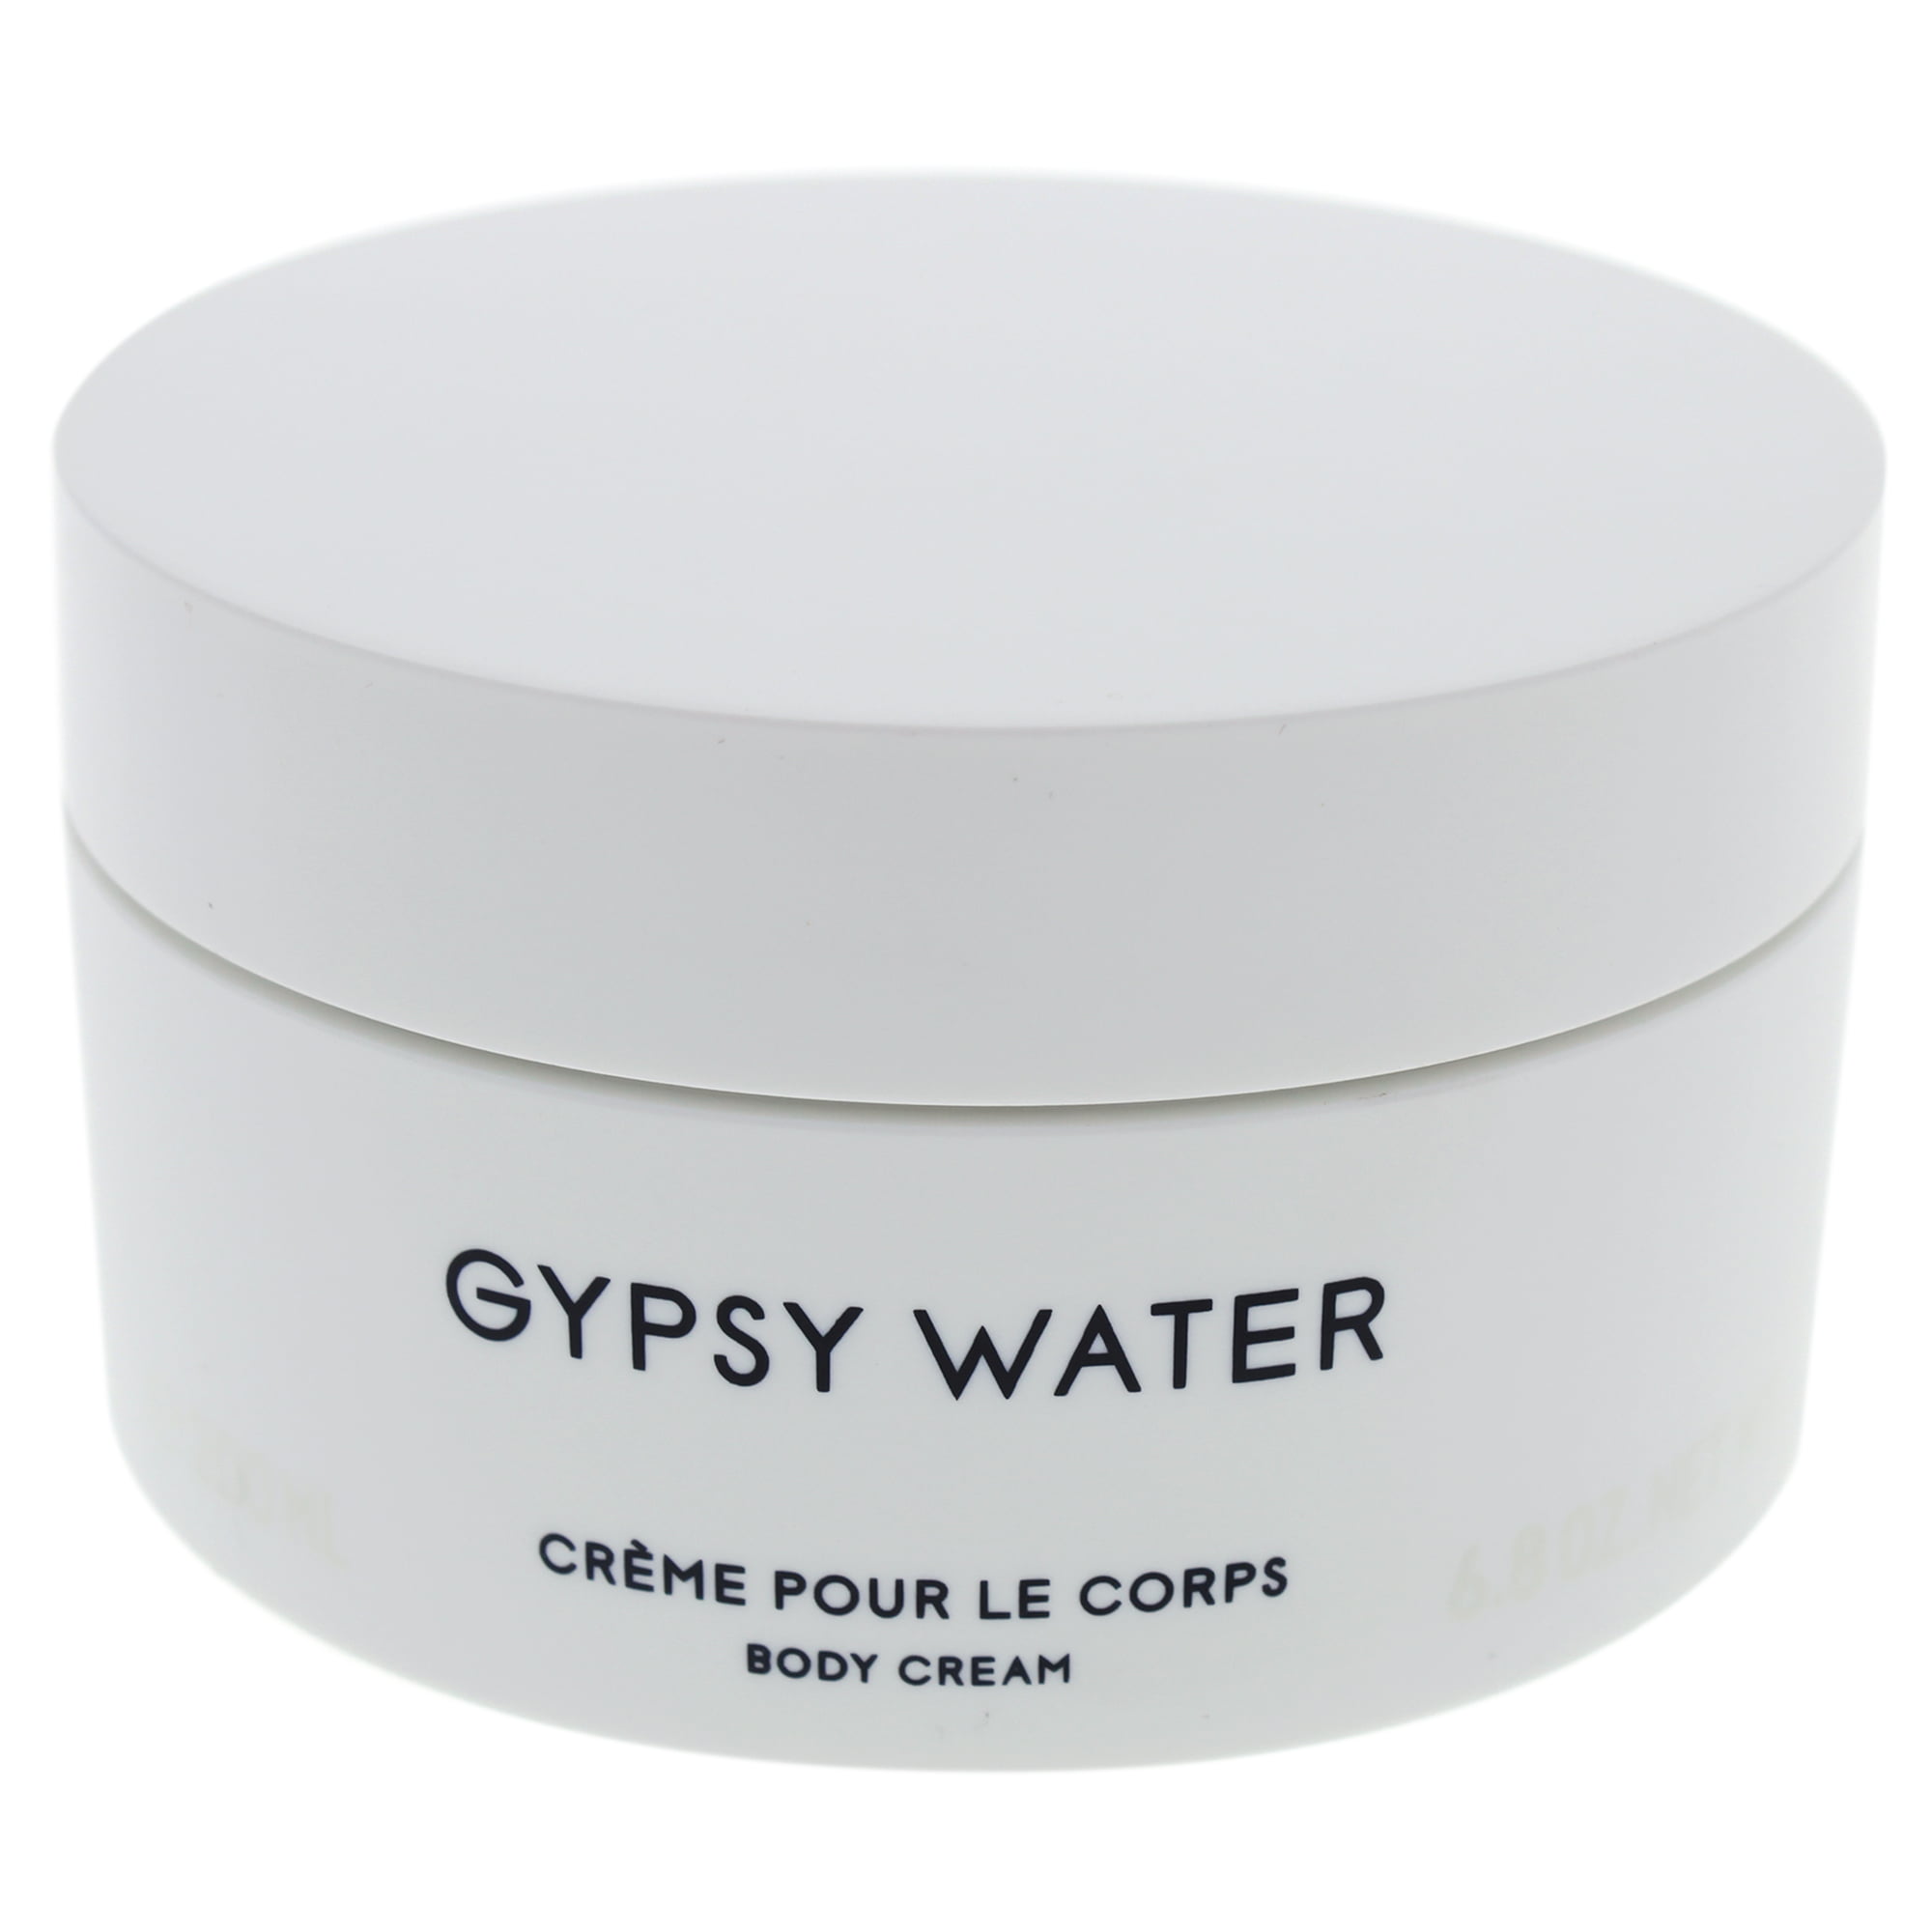 Gypsy Water Body Cream by Byredo for Women - 6.76 oz Body Cream ...